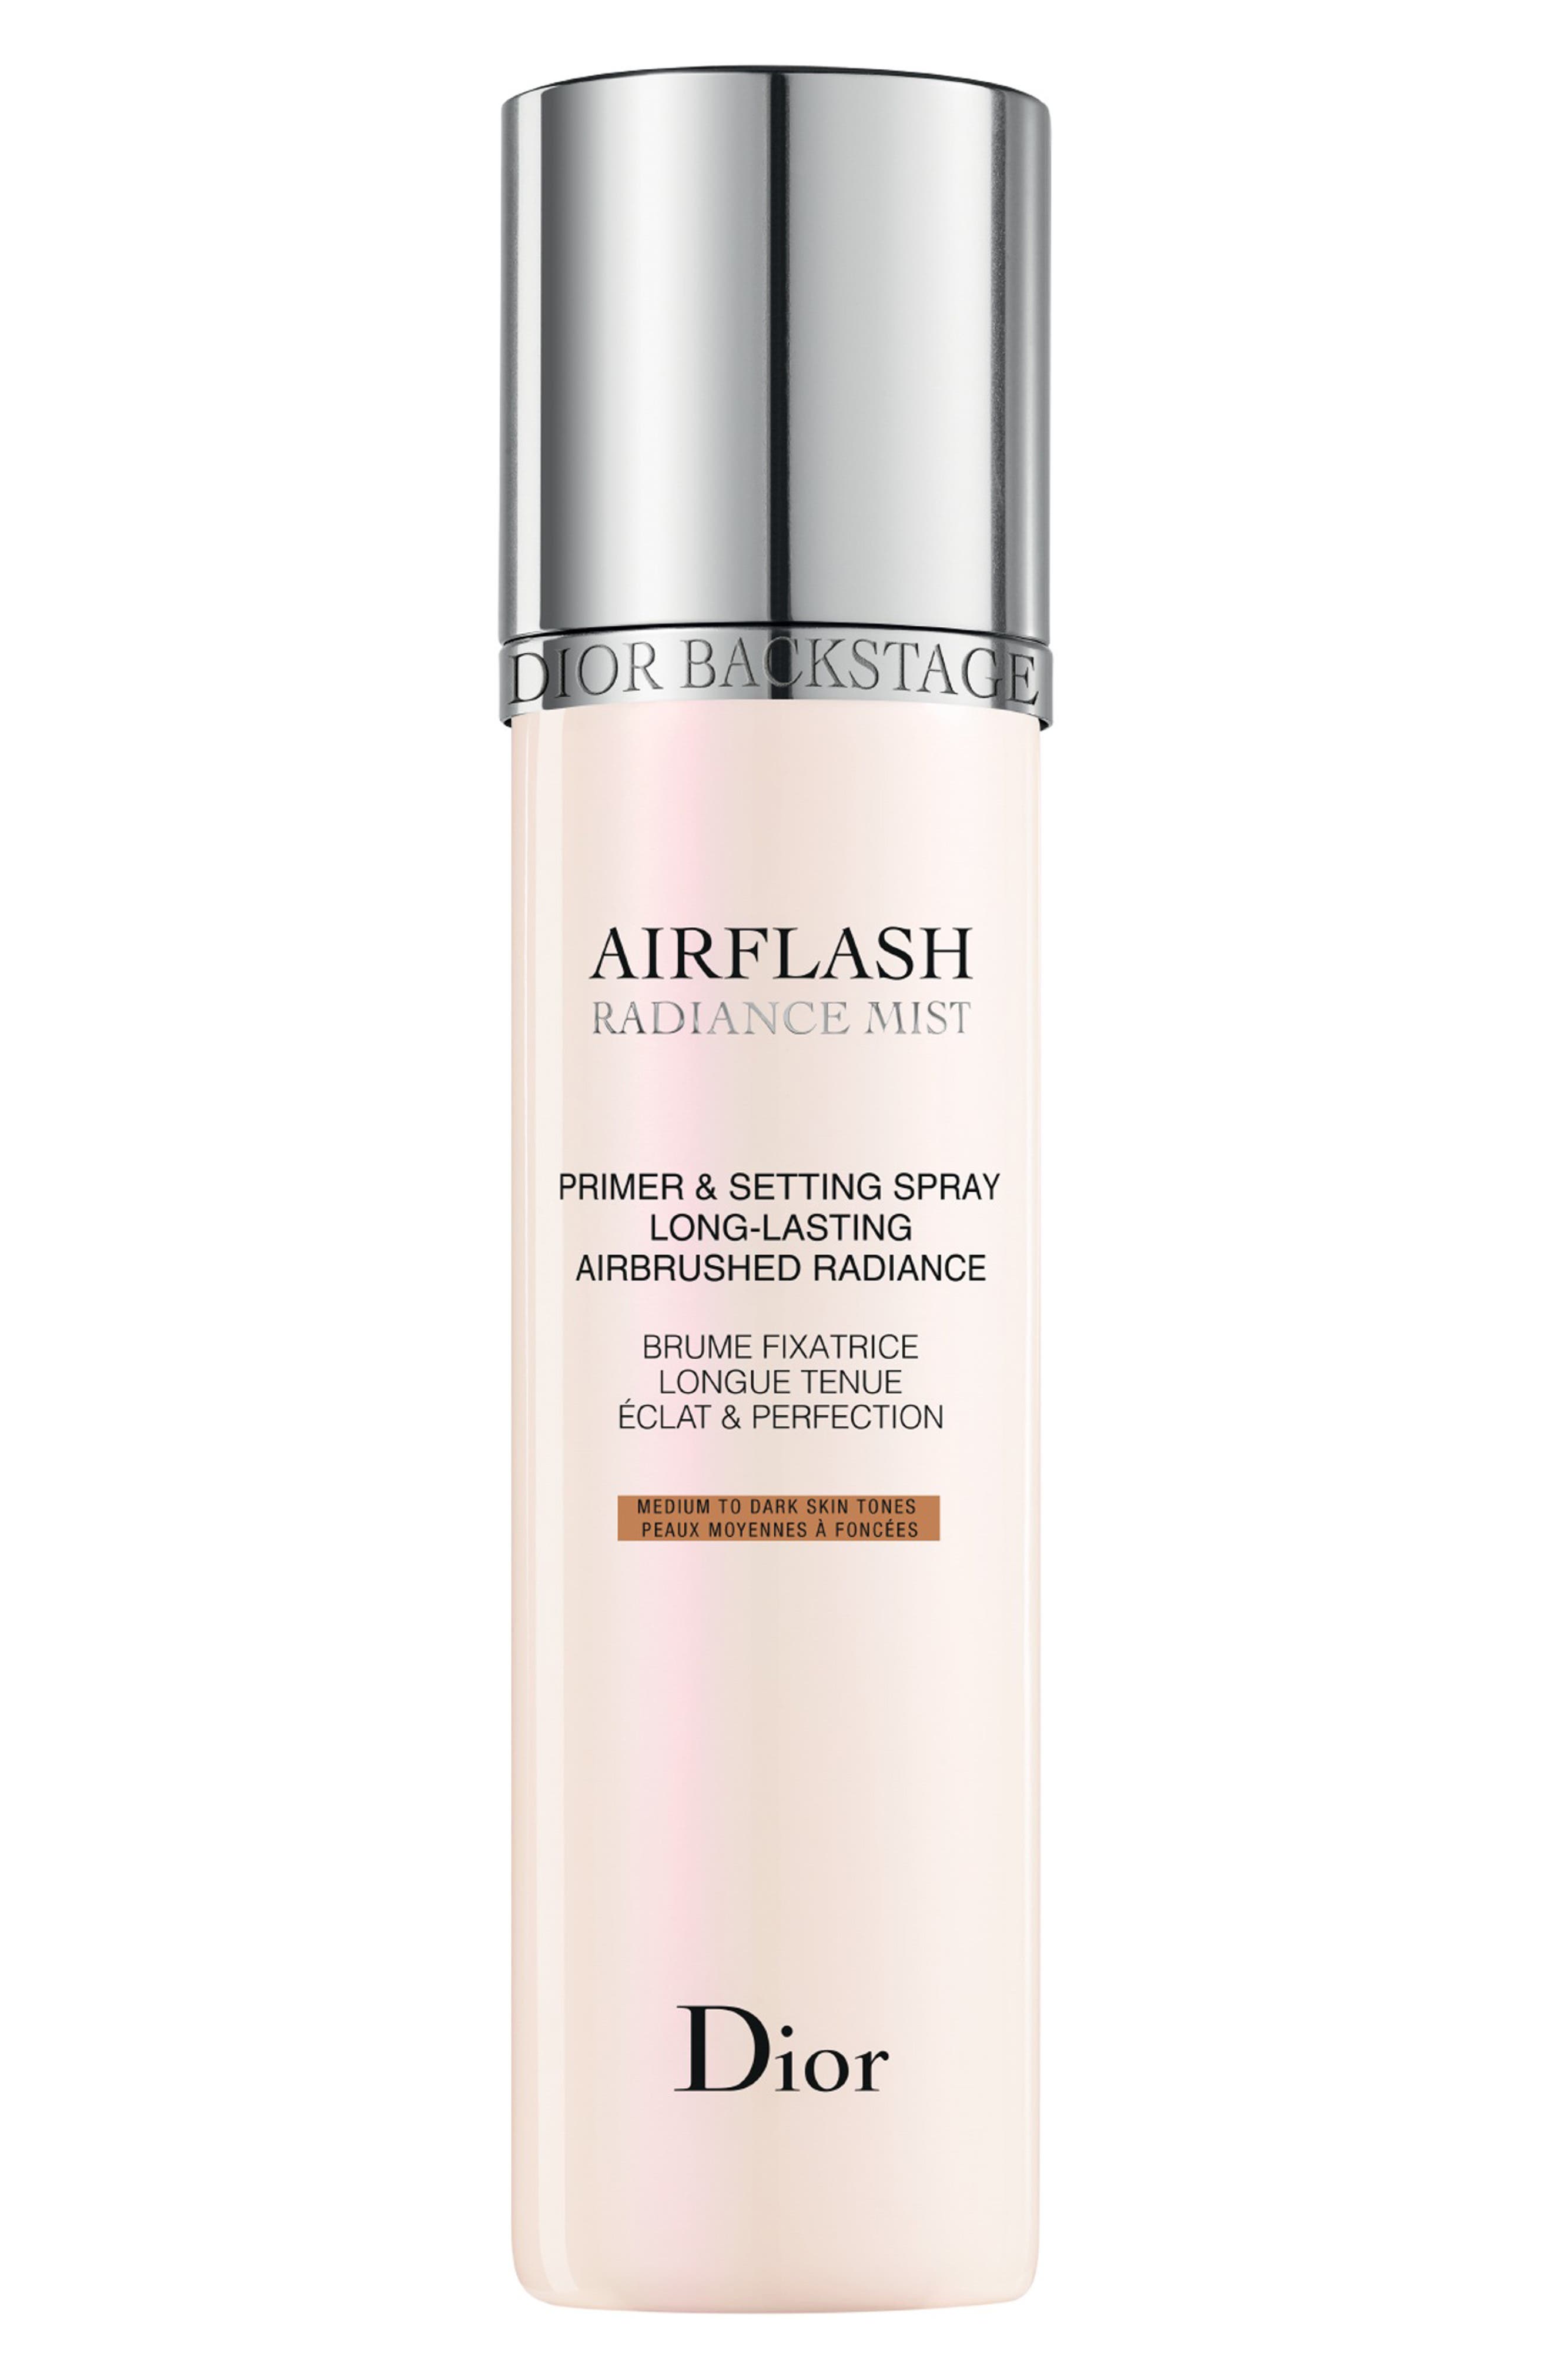 dior airflash radiance mist primer & setting spray review